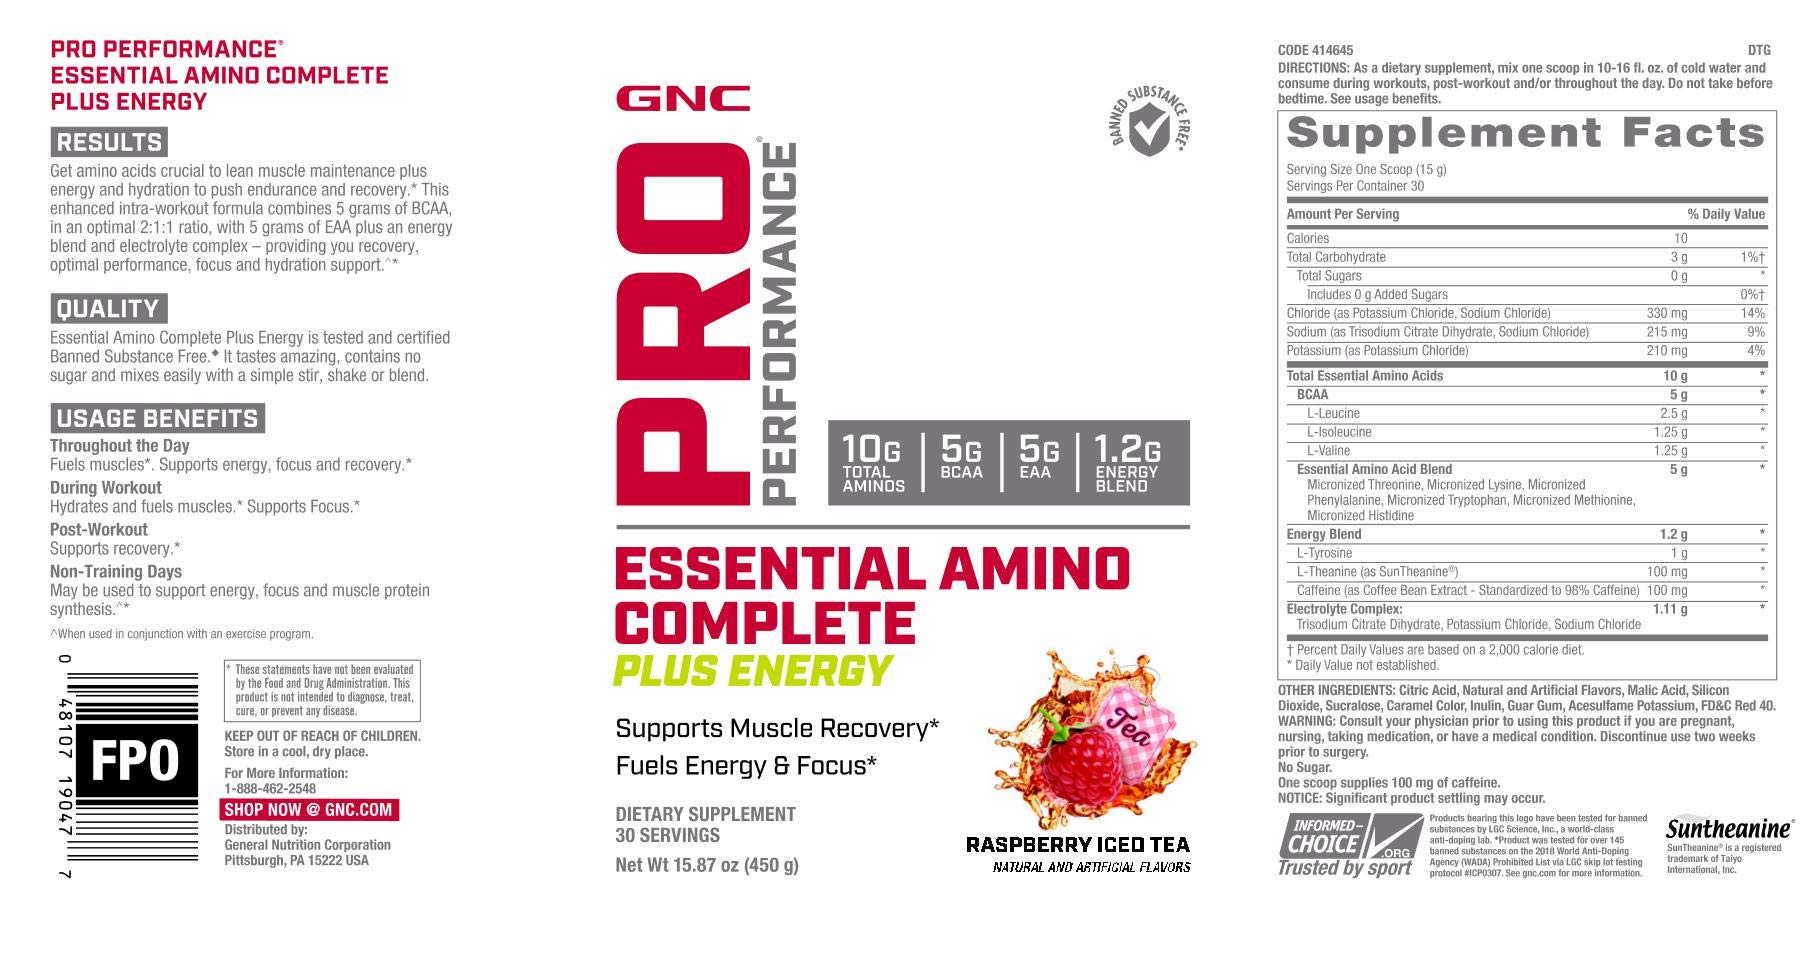 GNC Pro Performance Essential Amino Complete Plus Energy - Raspberry Iced Tea - 15.9 oz.